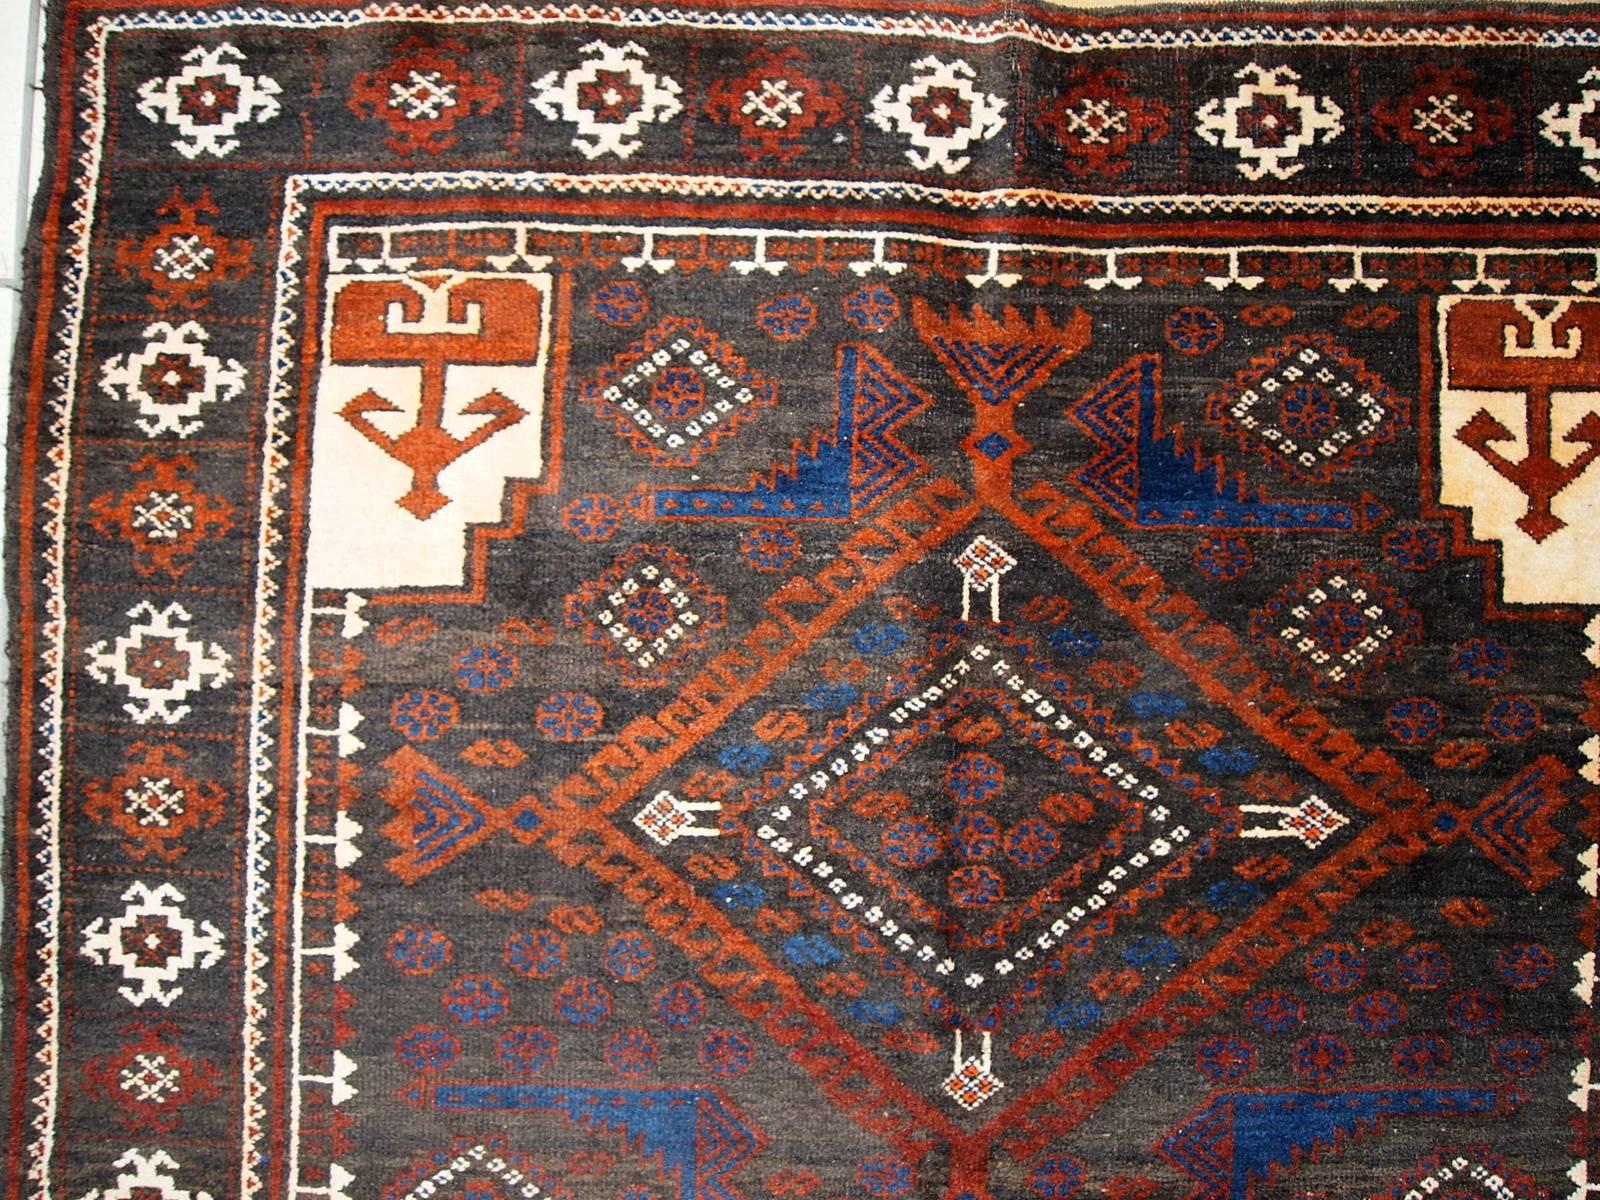 1930s rug